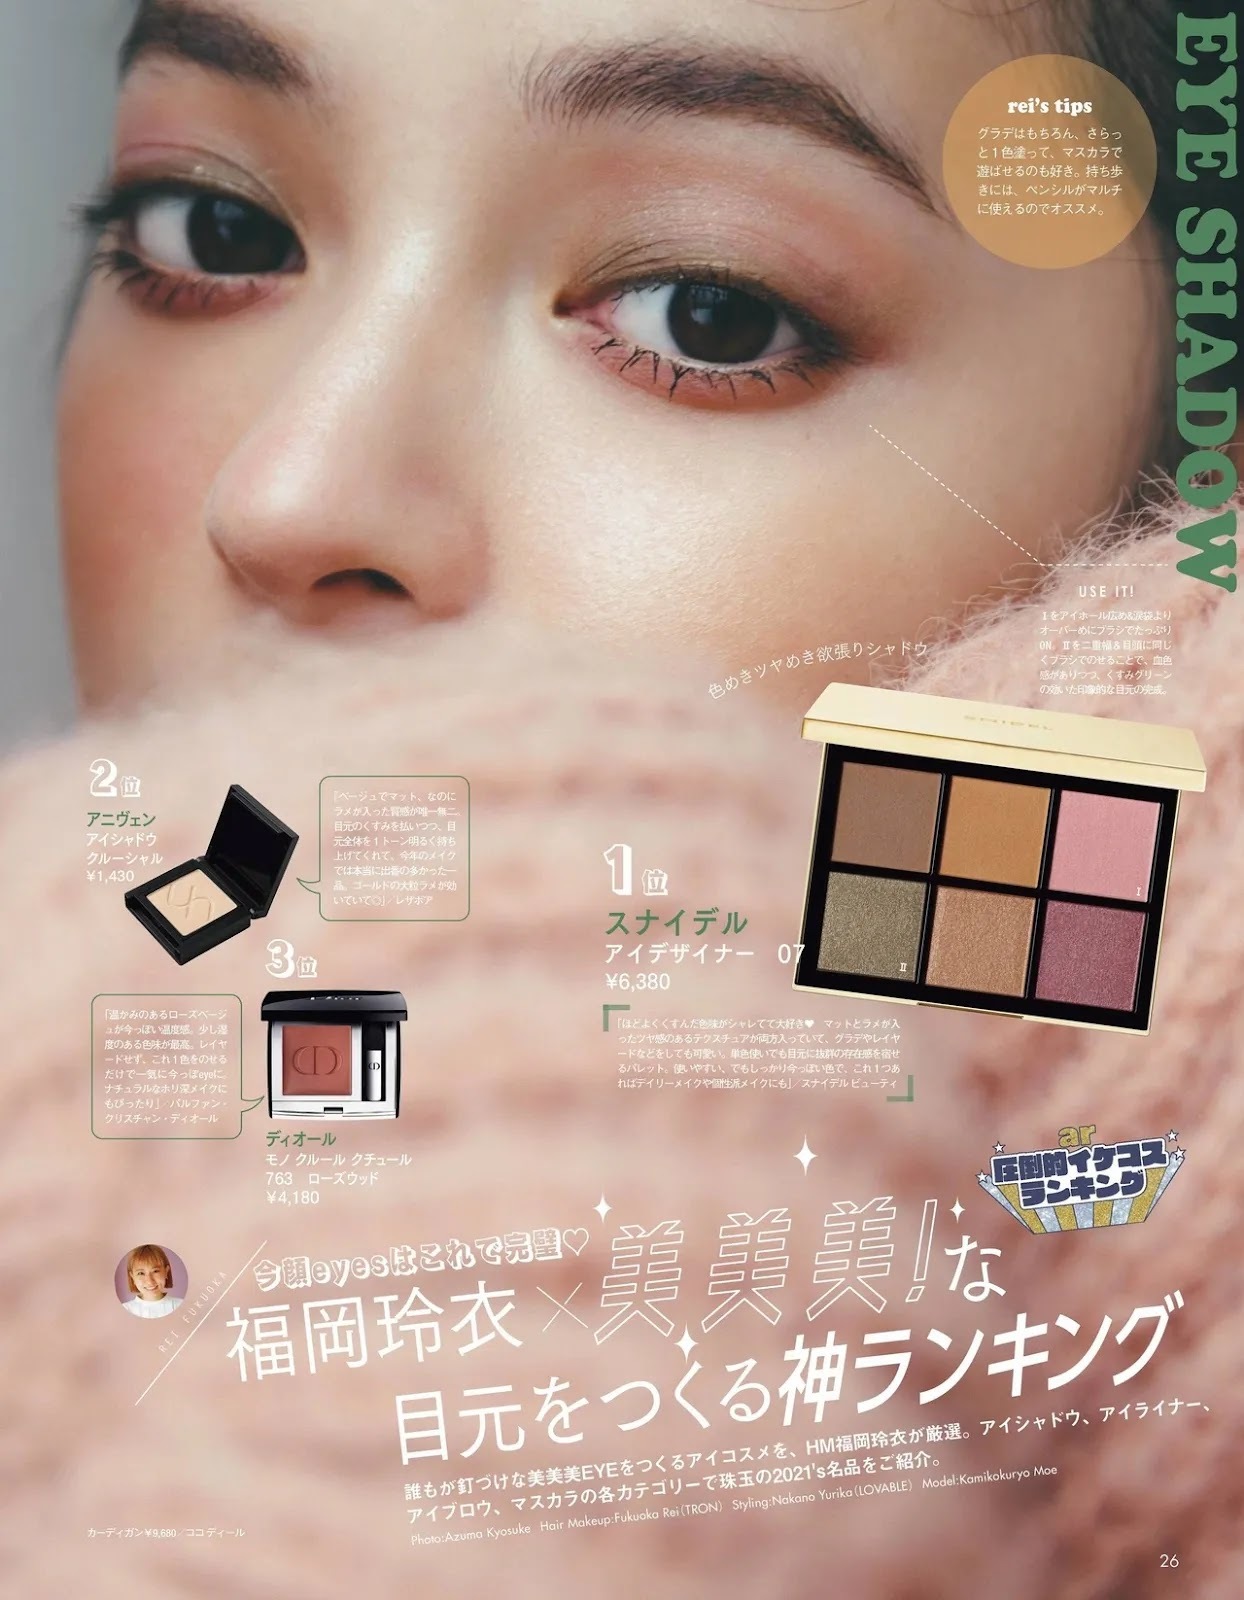 Kamikokuryo Moe 上國料萌衣, aR Magazine 2021.12 - itotii